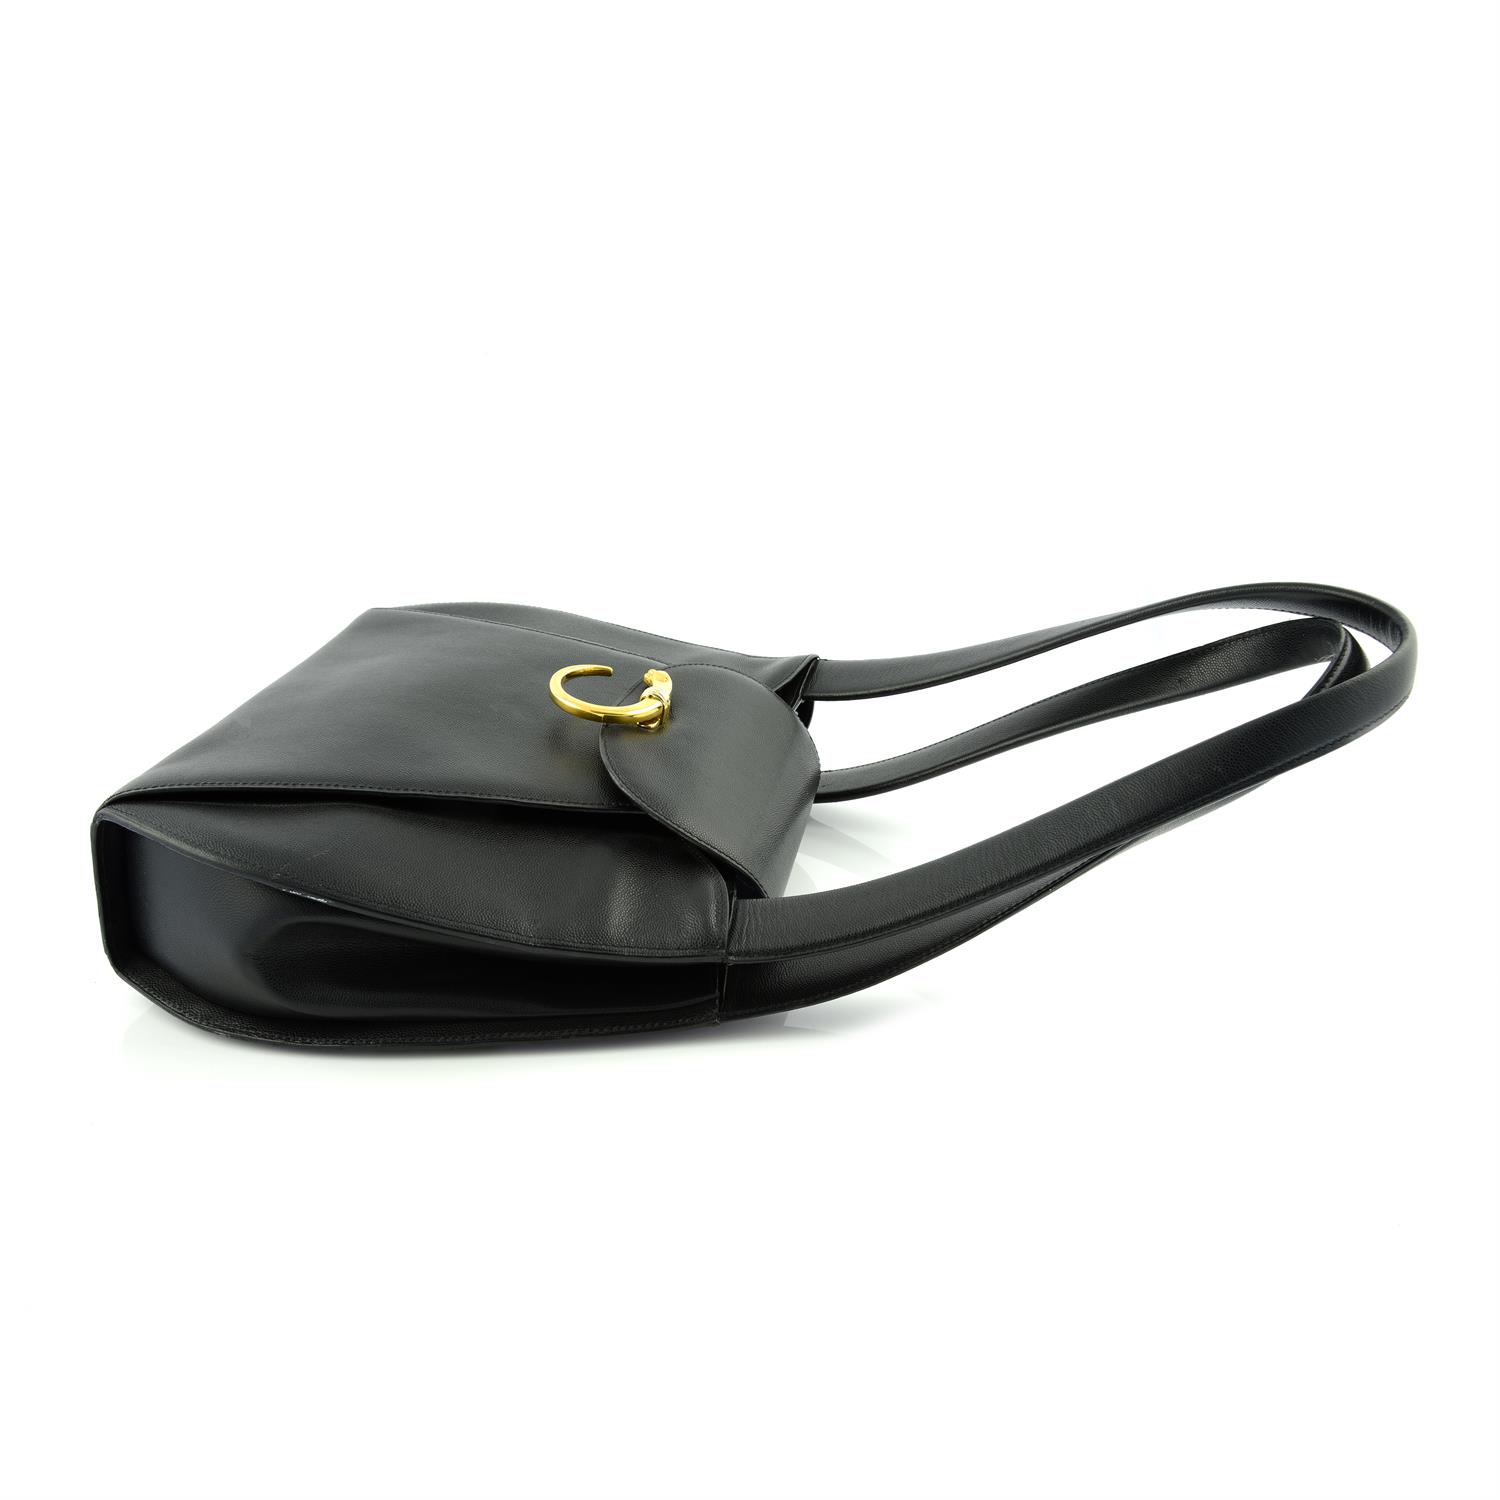 CARTIER - a black leather Panthère handbag. - Image 4 of 7